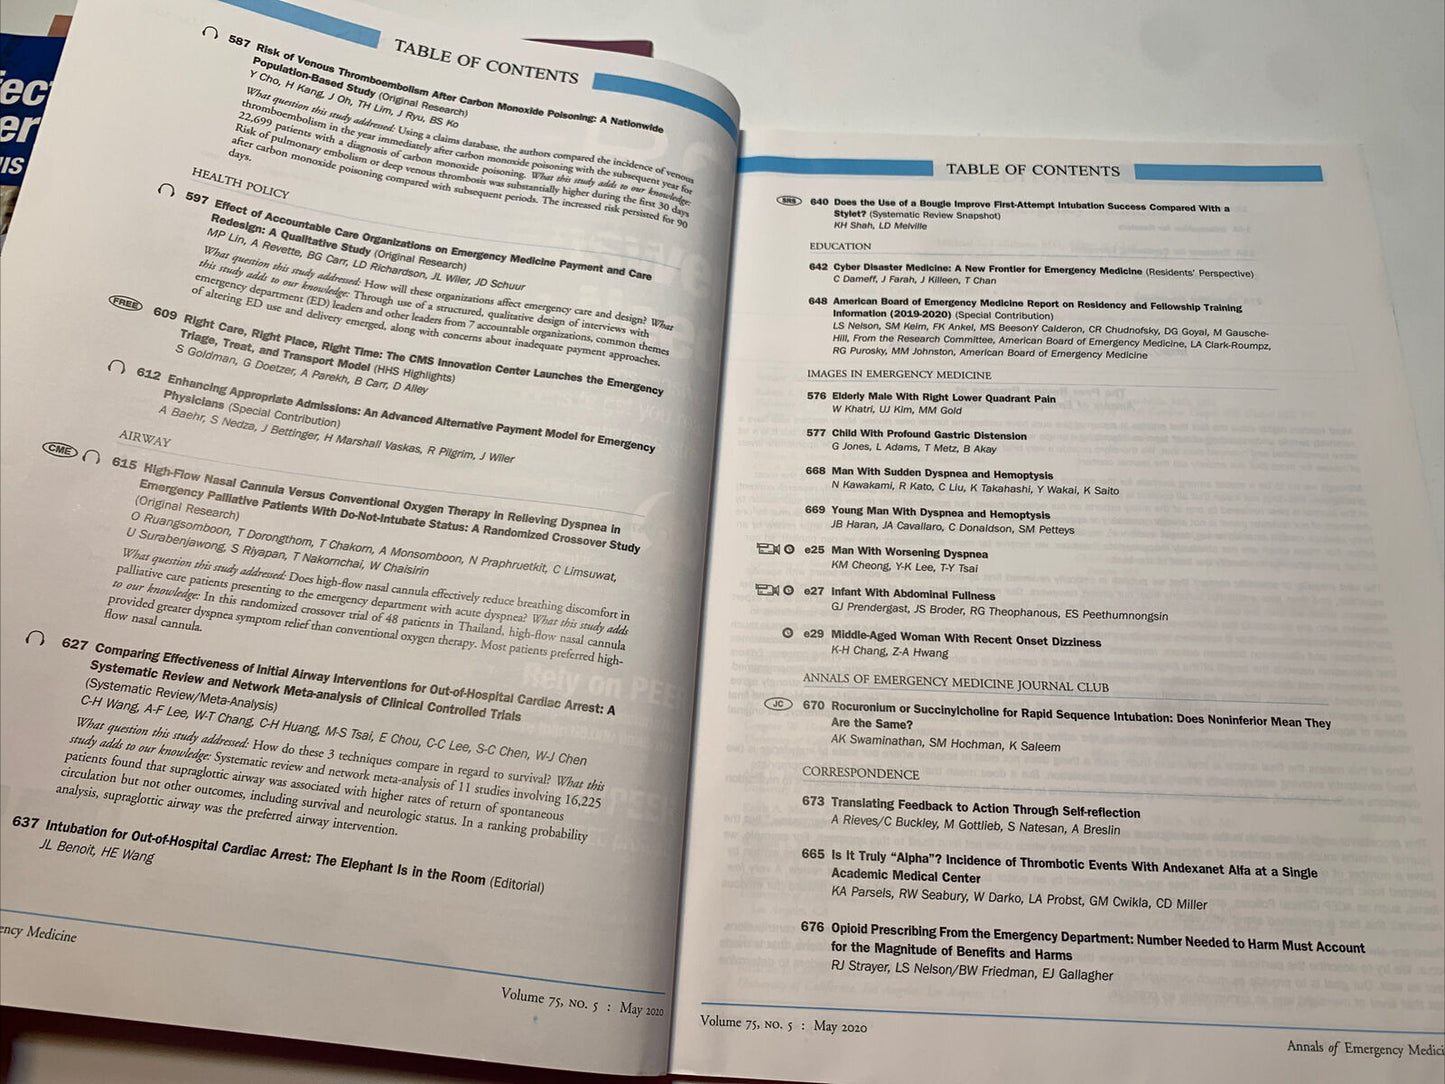 Annals of Emergency Medicine International journal 2020 vols 75-76, 4 Book LotA2